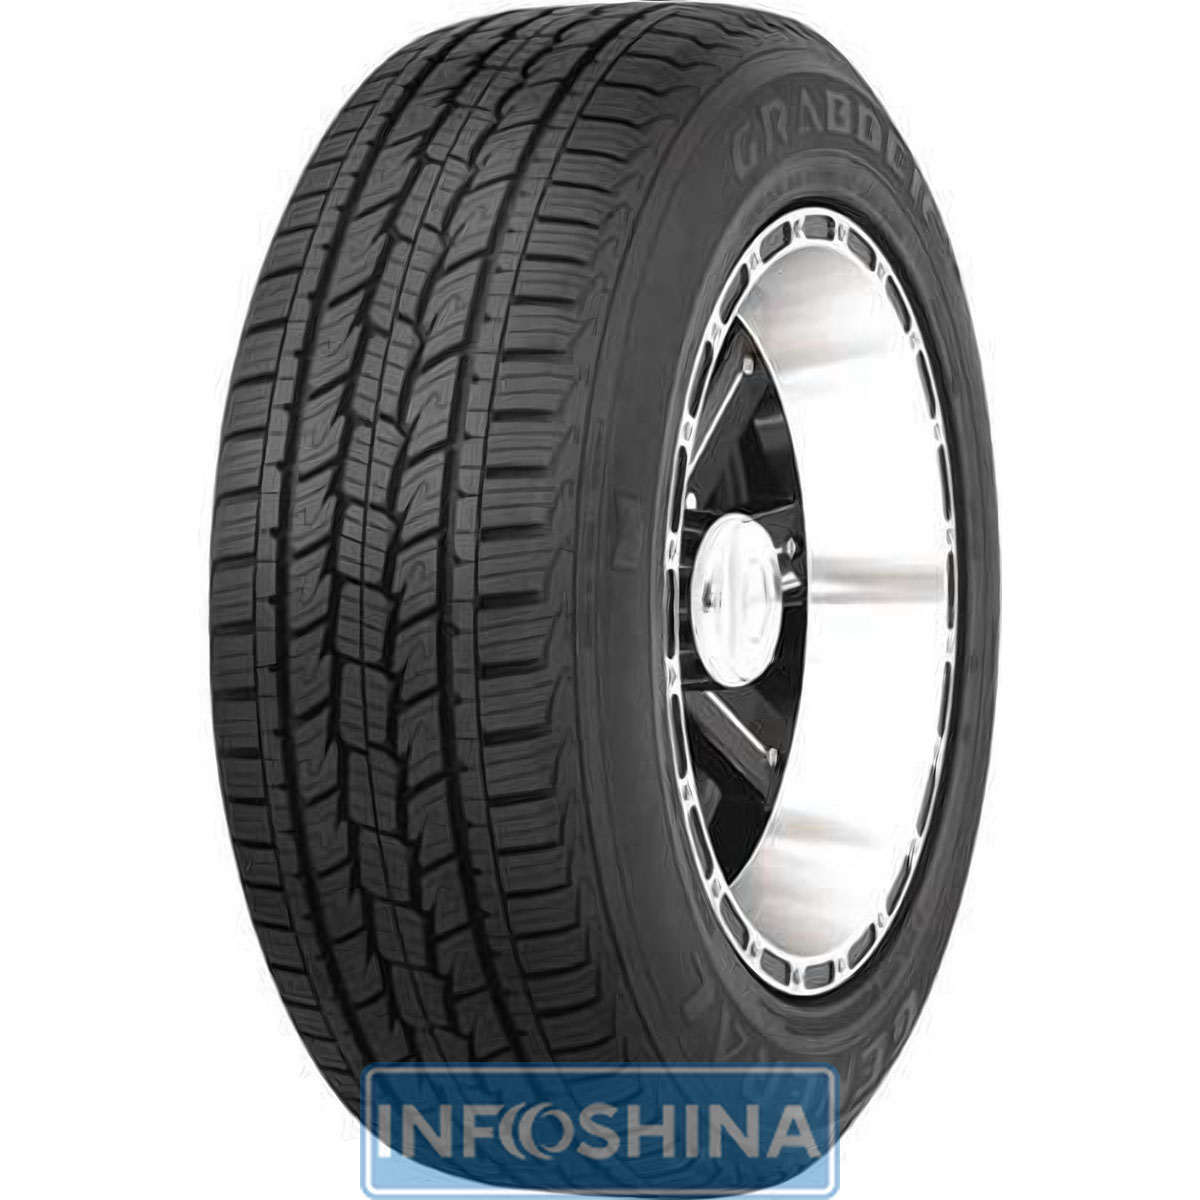 Купить шины General Tire Grabber HTS 225/70 R15 100T